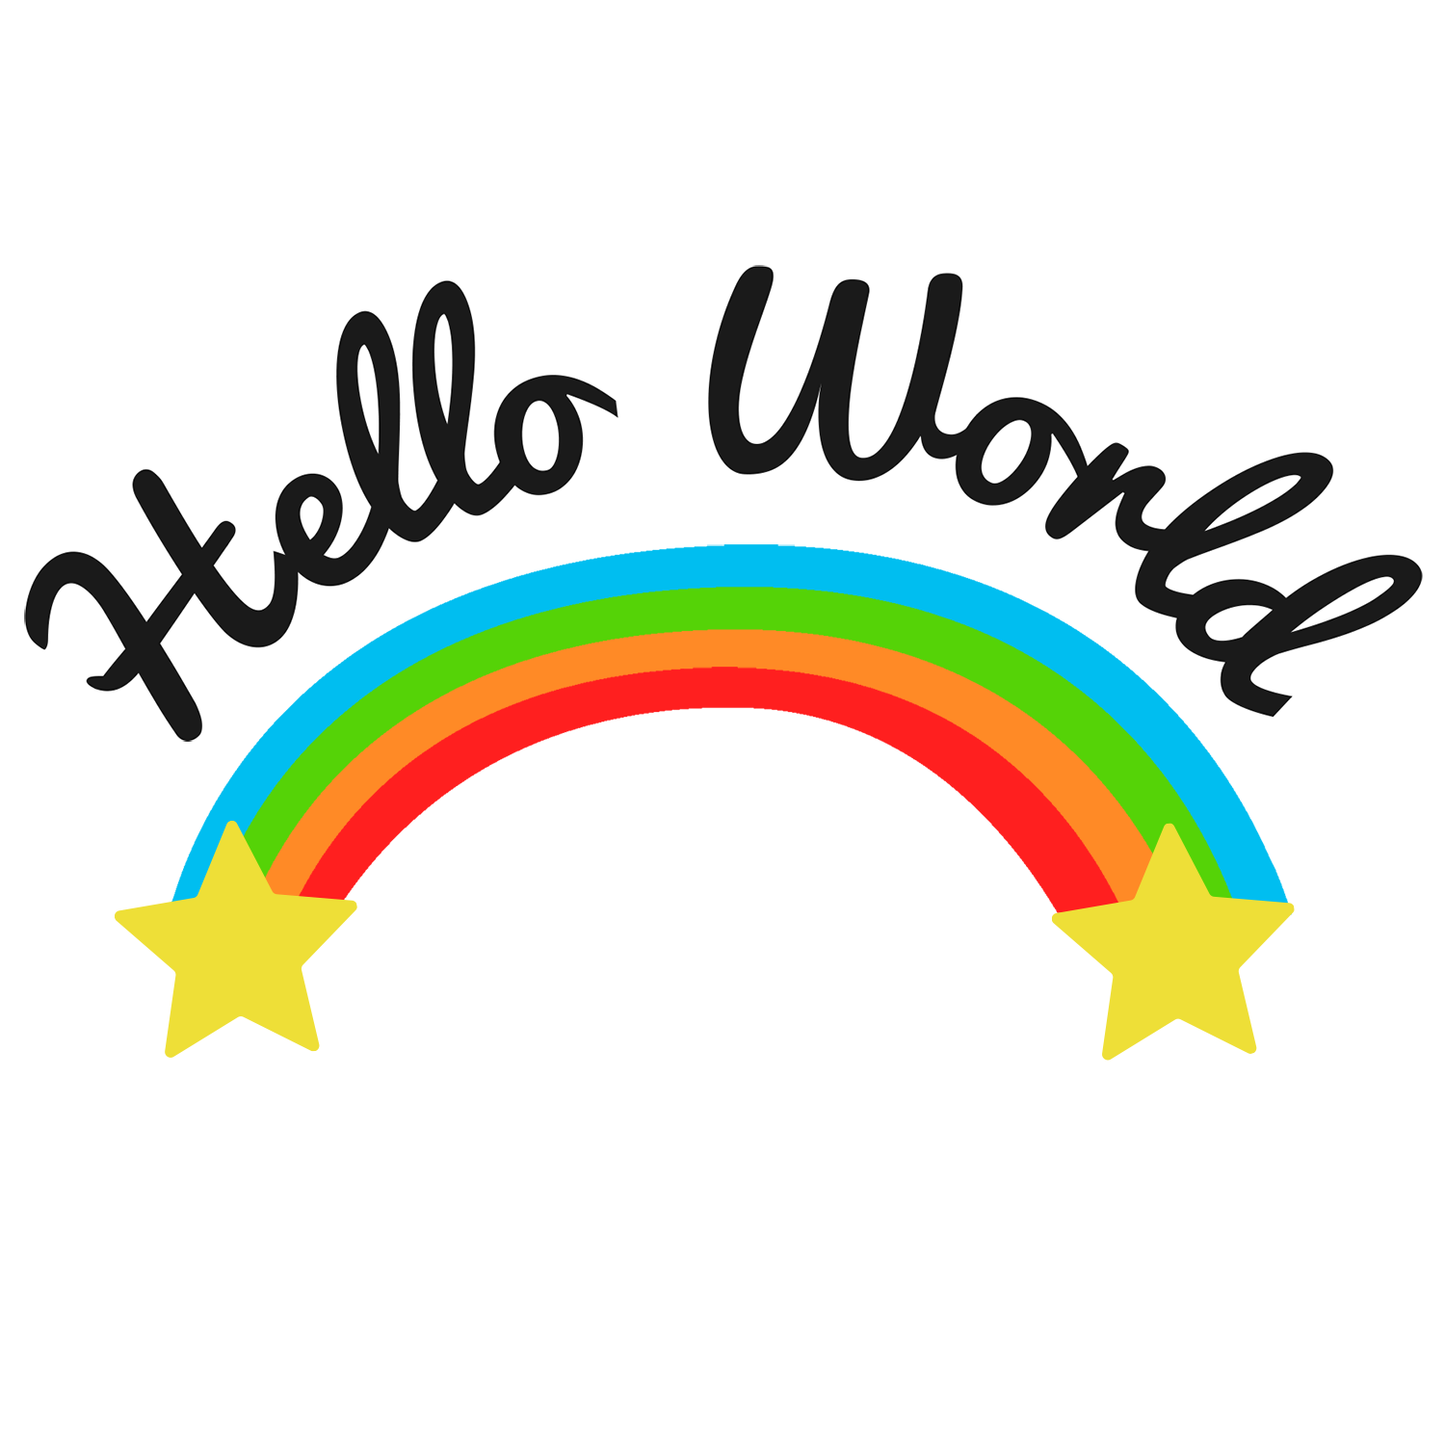 [Personalized] Endanzoo Organic Baby Bodysuit - Hello World